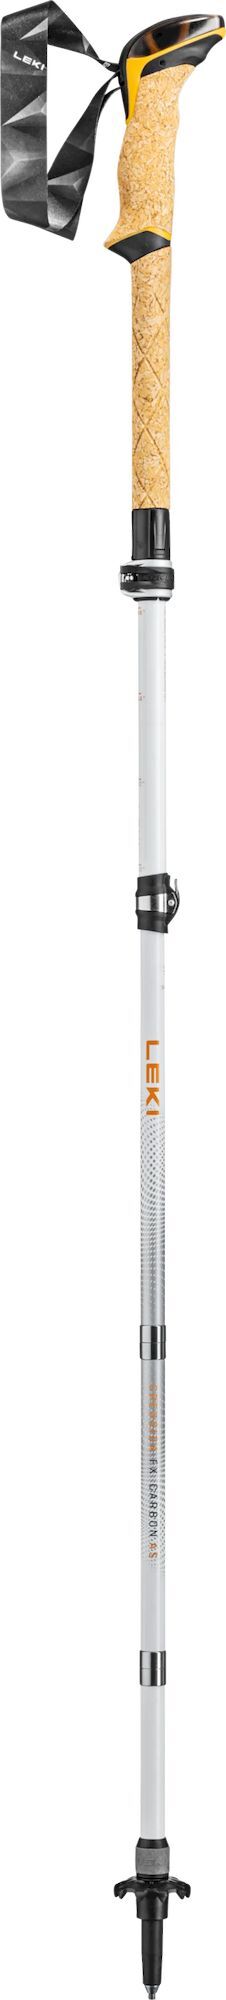 Leki Cressida FX Carbon AS - Trekking poles | Hardloop